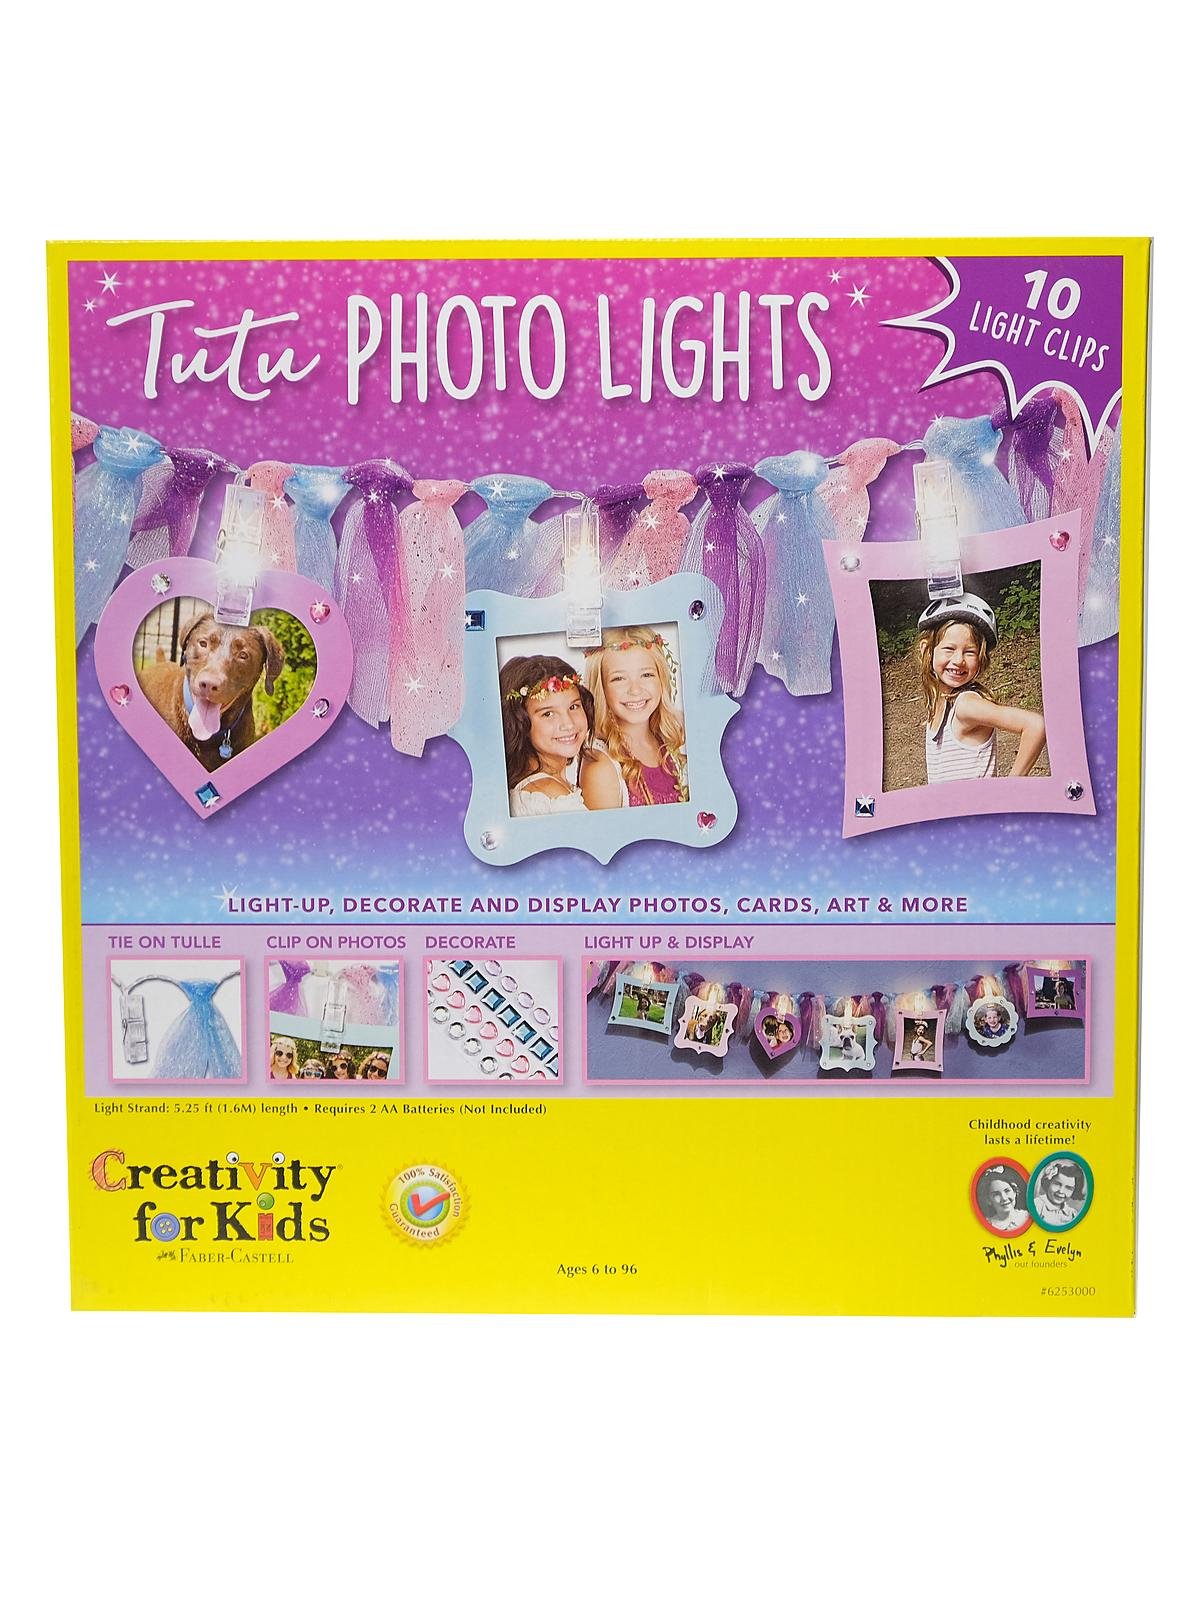 Creativity For Kids - Tutu Photo Lights